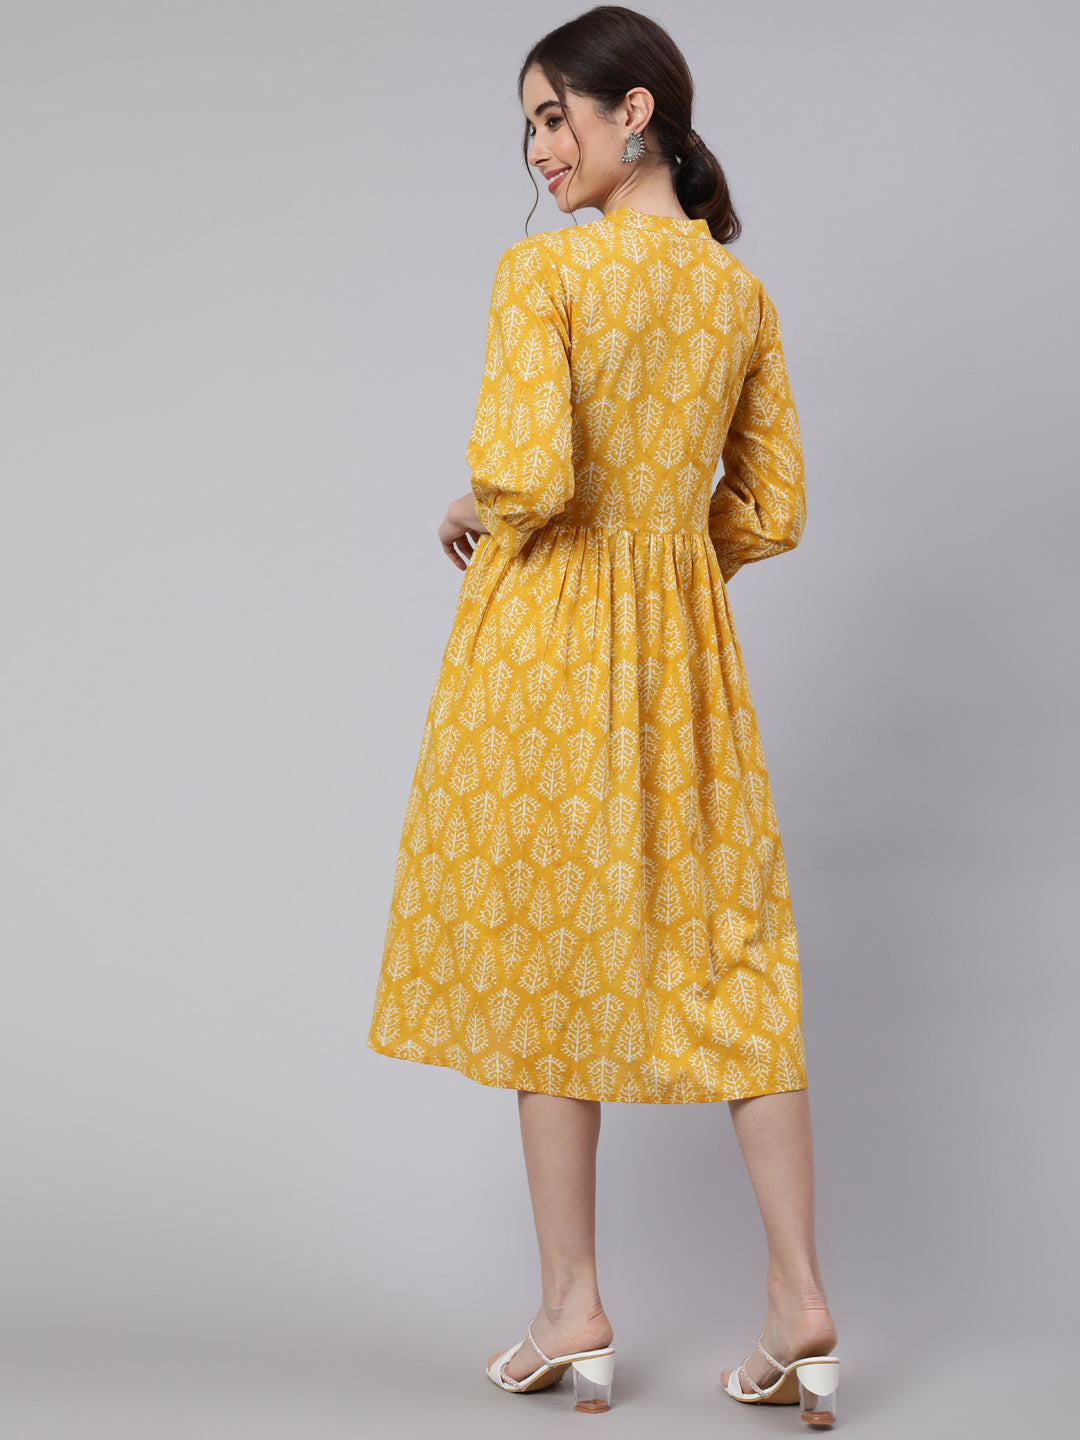 Yellow Ethnic Printed Flared Dress